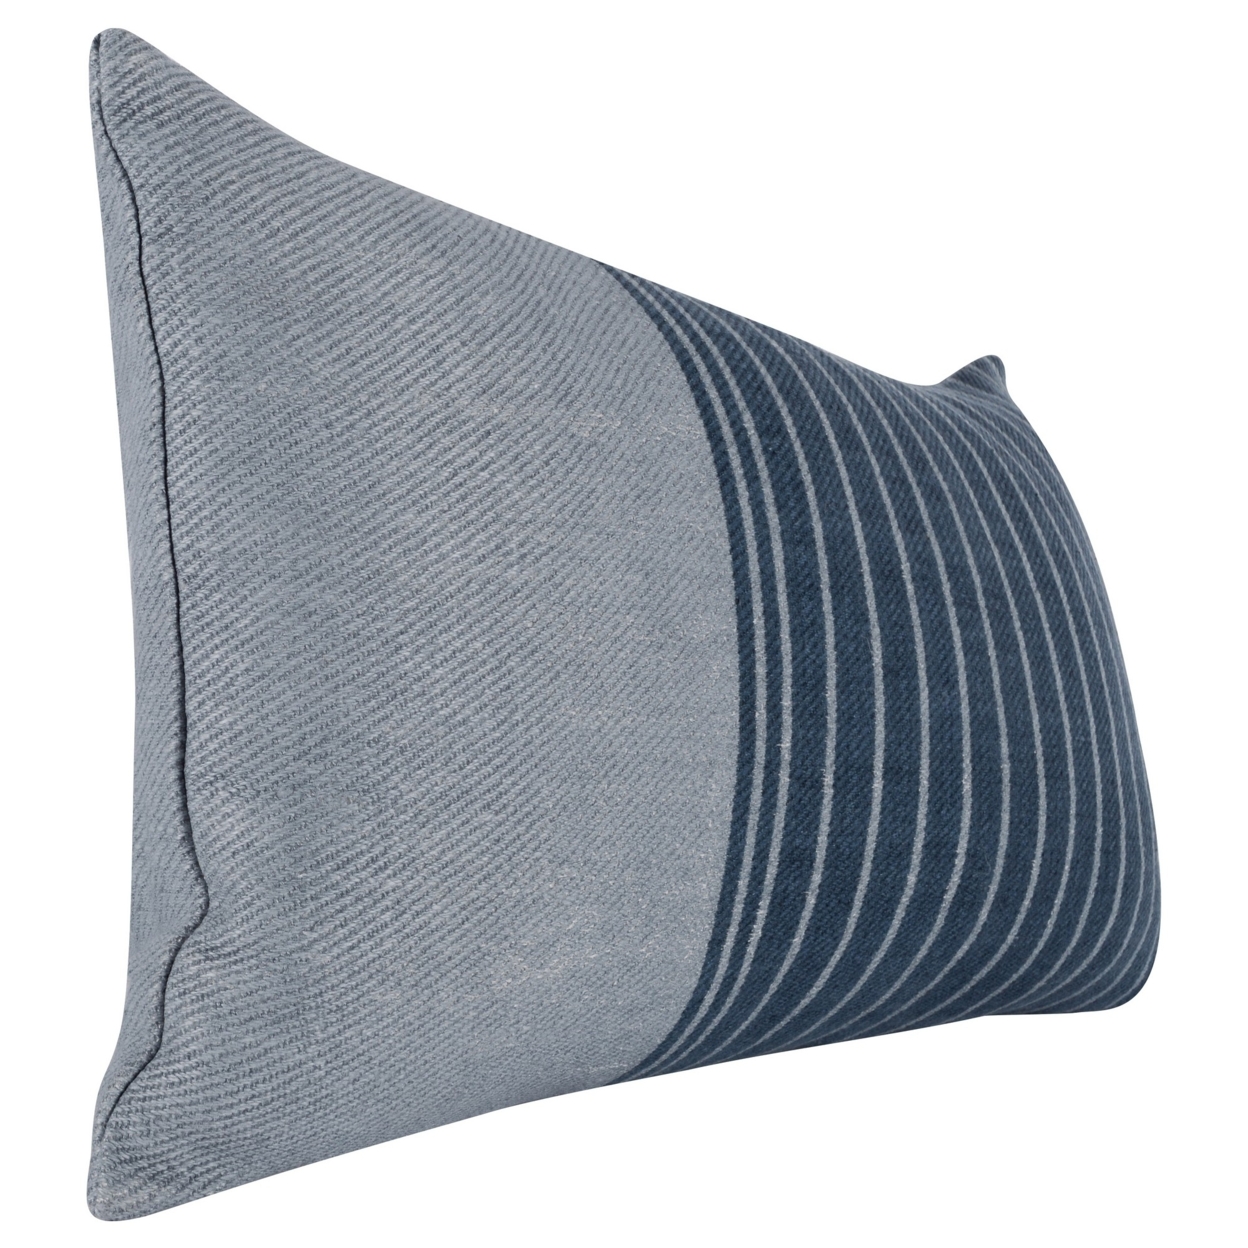 14 X 26 Linen Twill Accent Throw Pillow, Hand Printed Stripe Design, Gray, Saltoro Sherpi